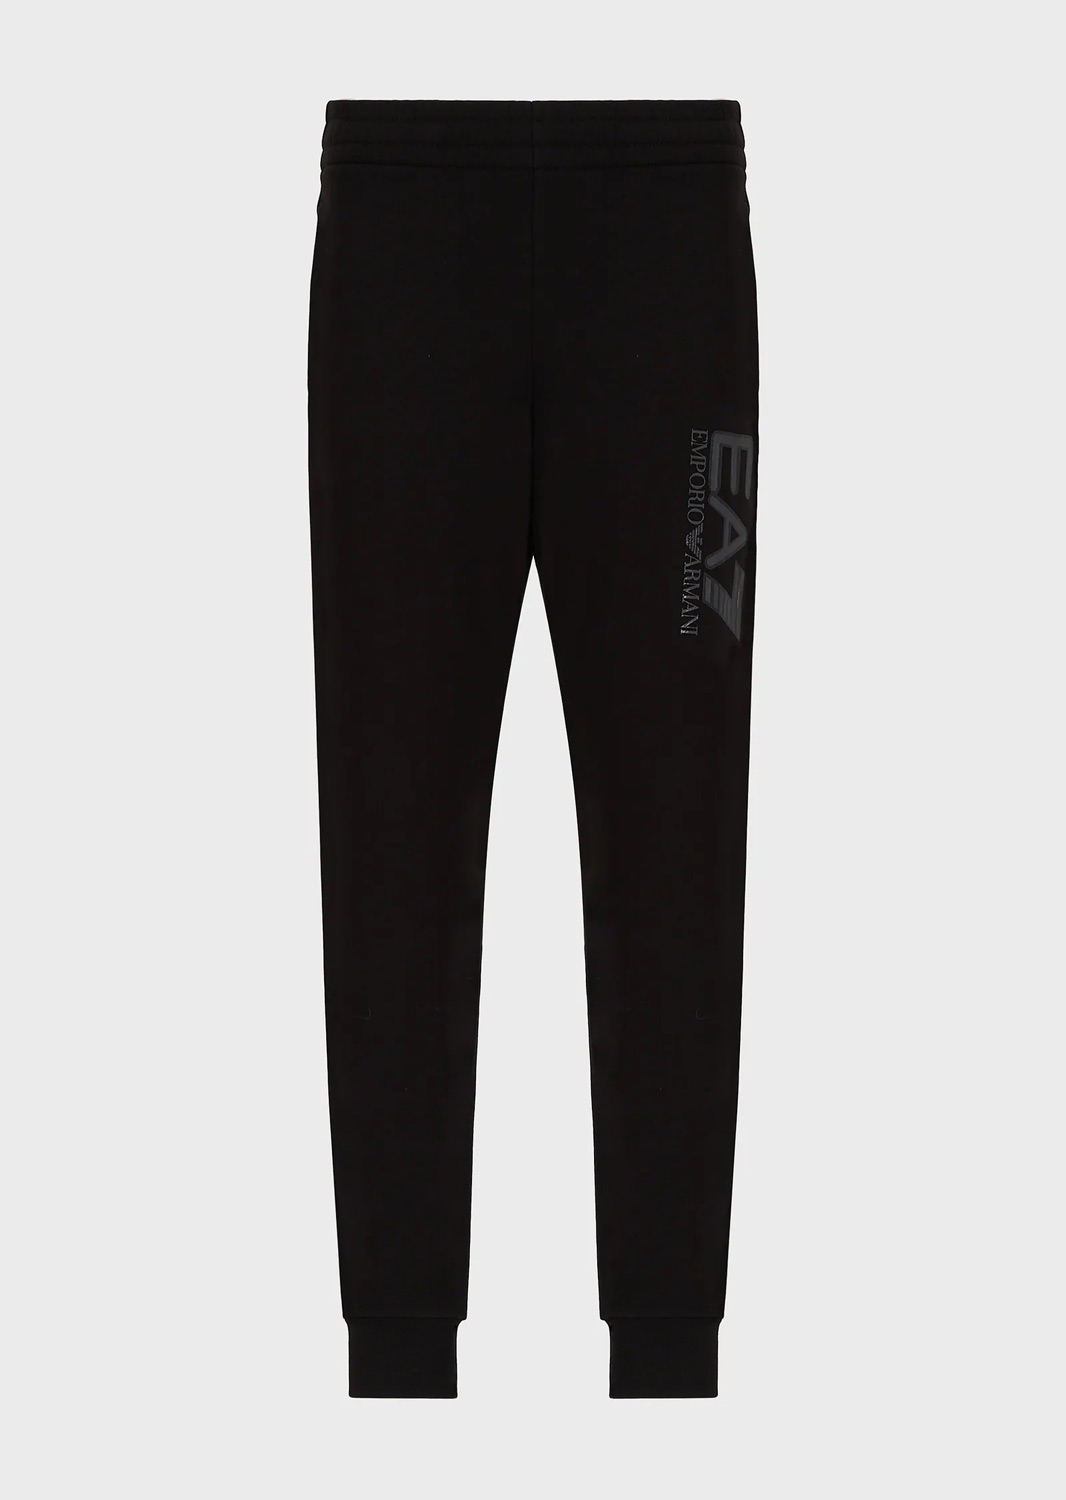 Pantalone Uomo EA7 jogger con maxi logo nero